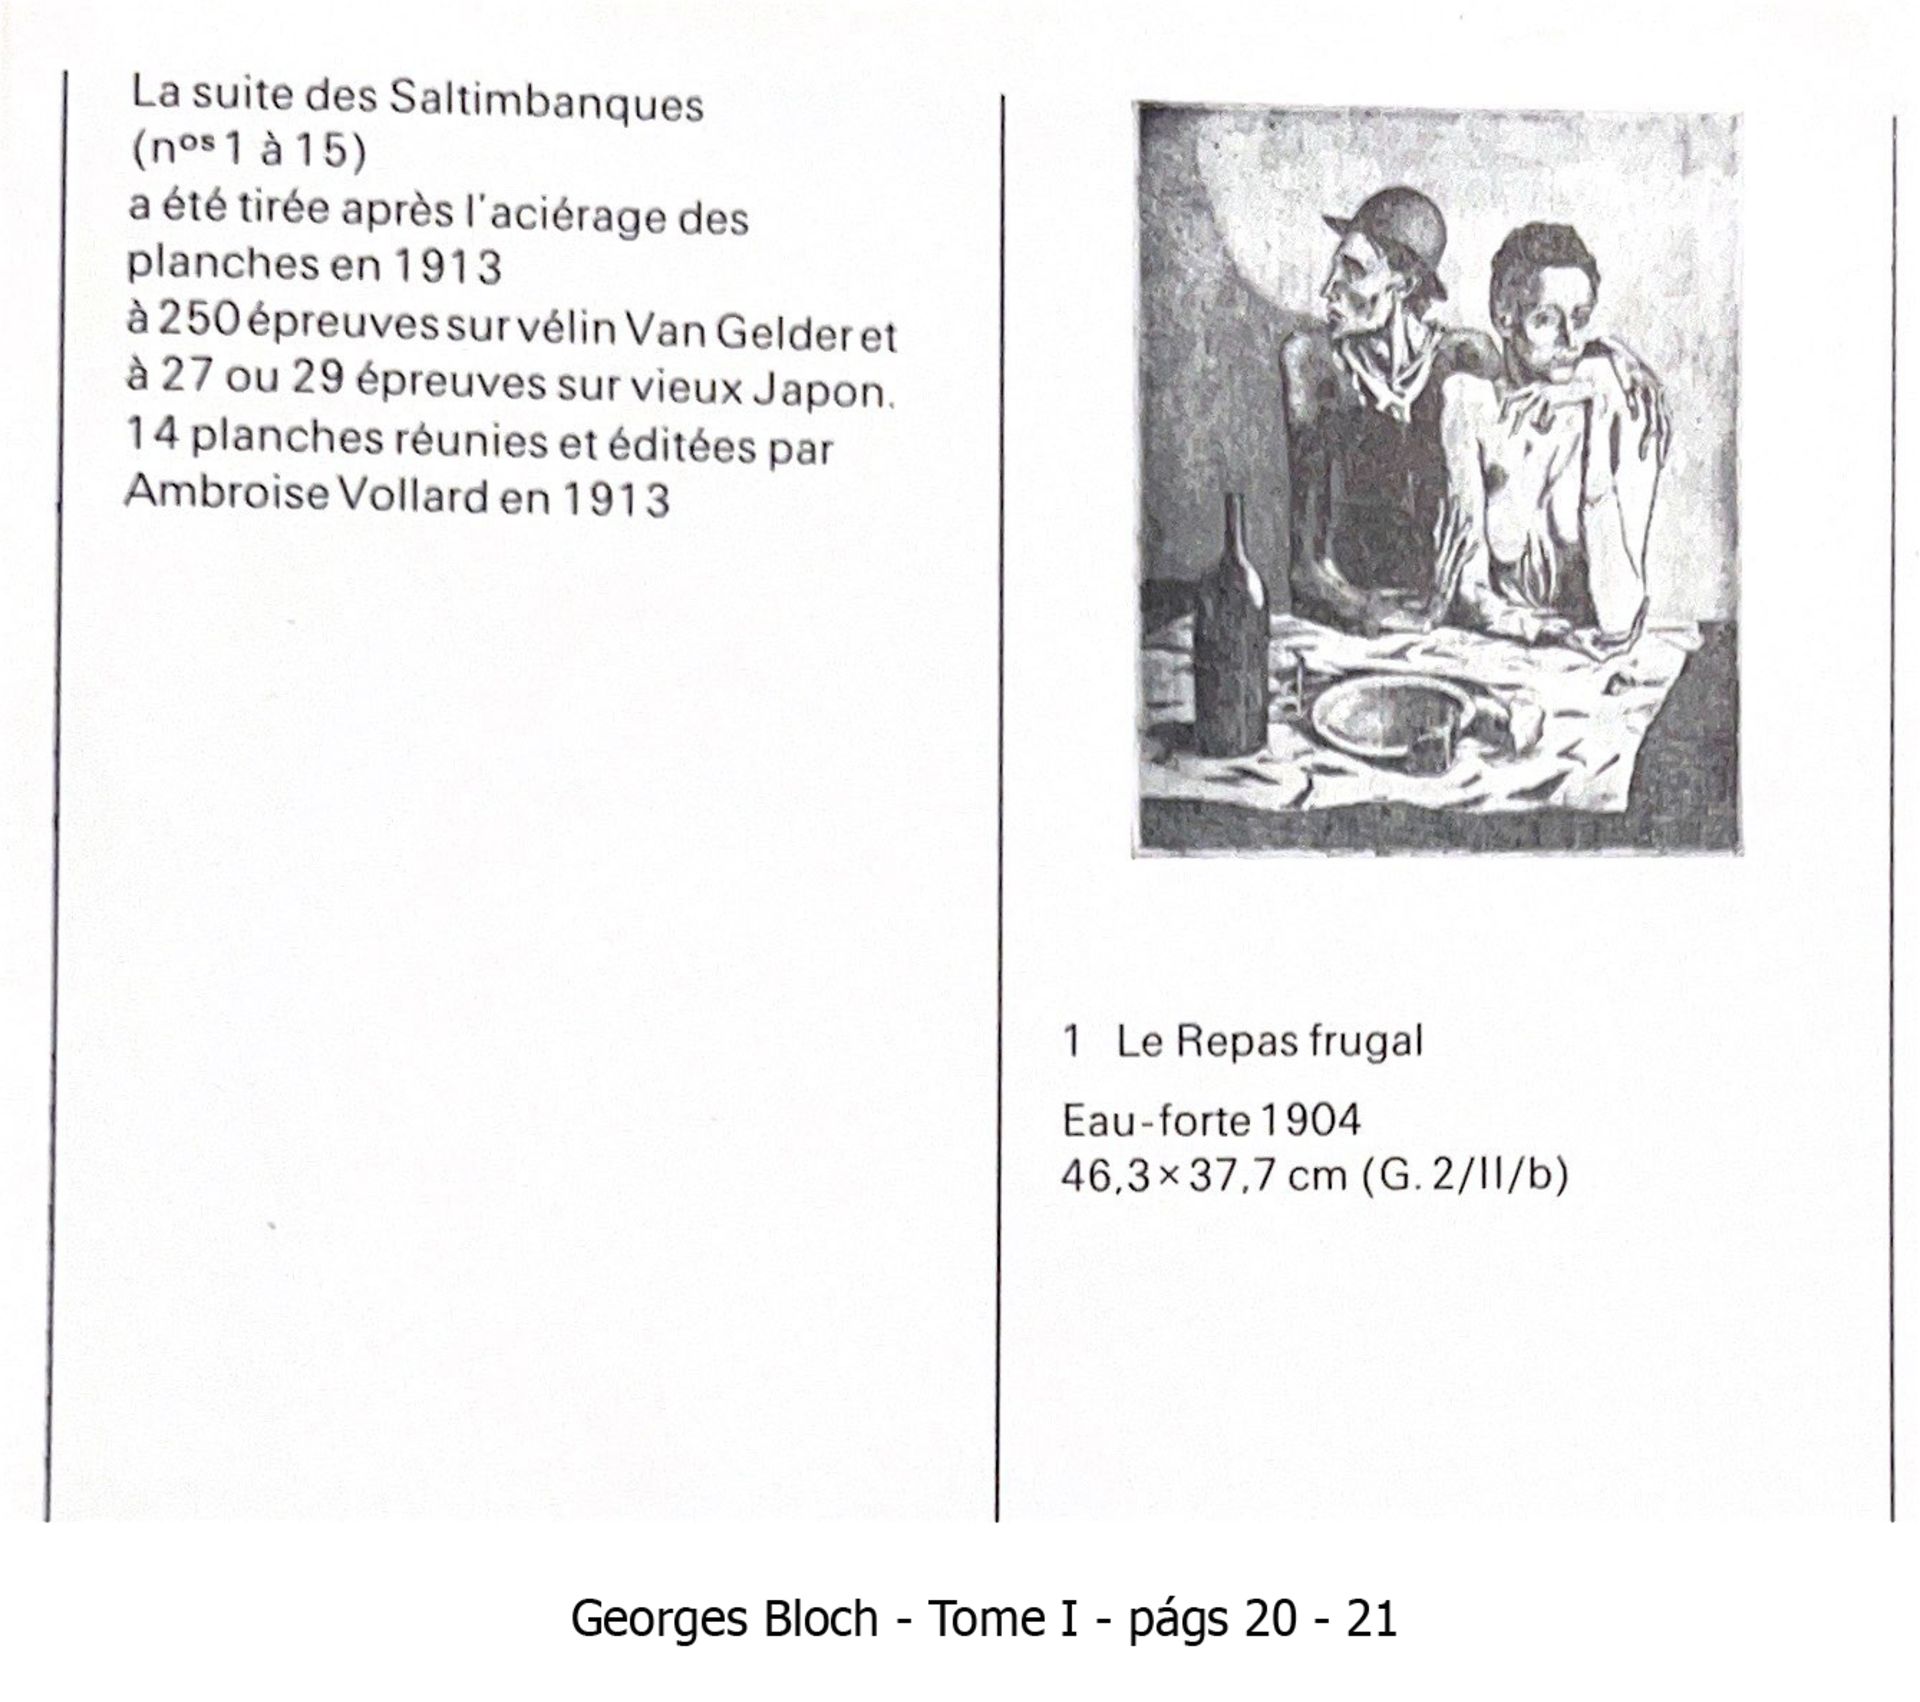 Pablo Ruiz Picasso (Malaga, 1881 - Mougins, 1973) - Image 8 of 8